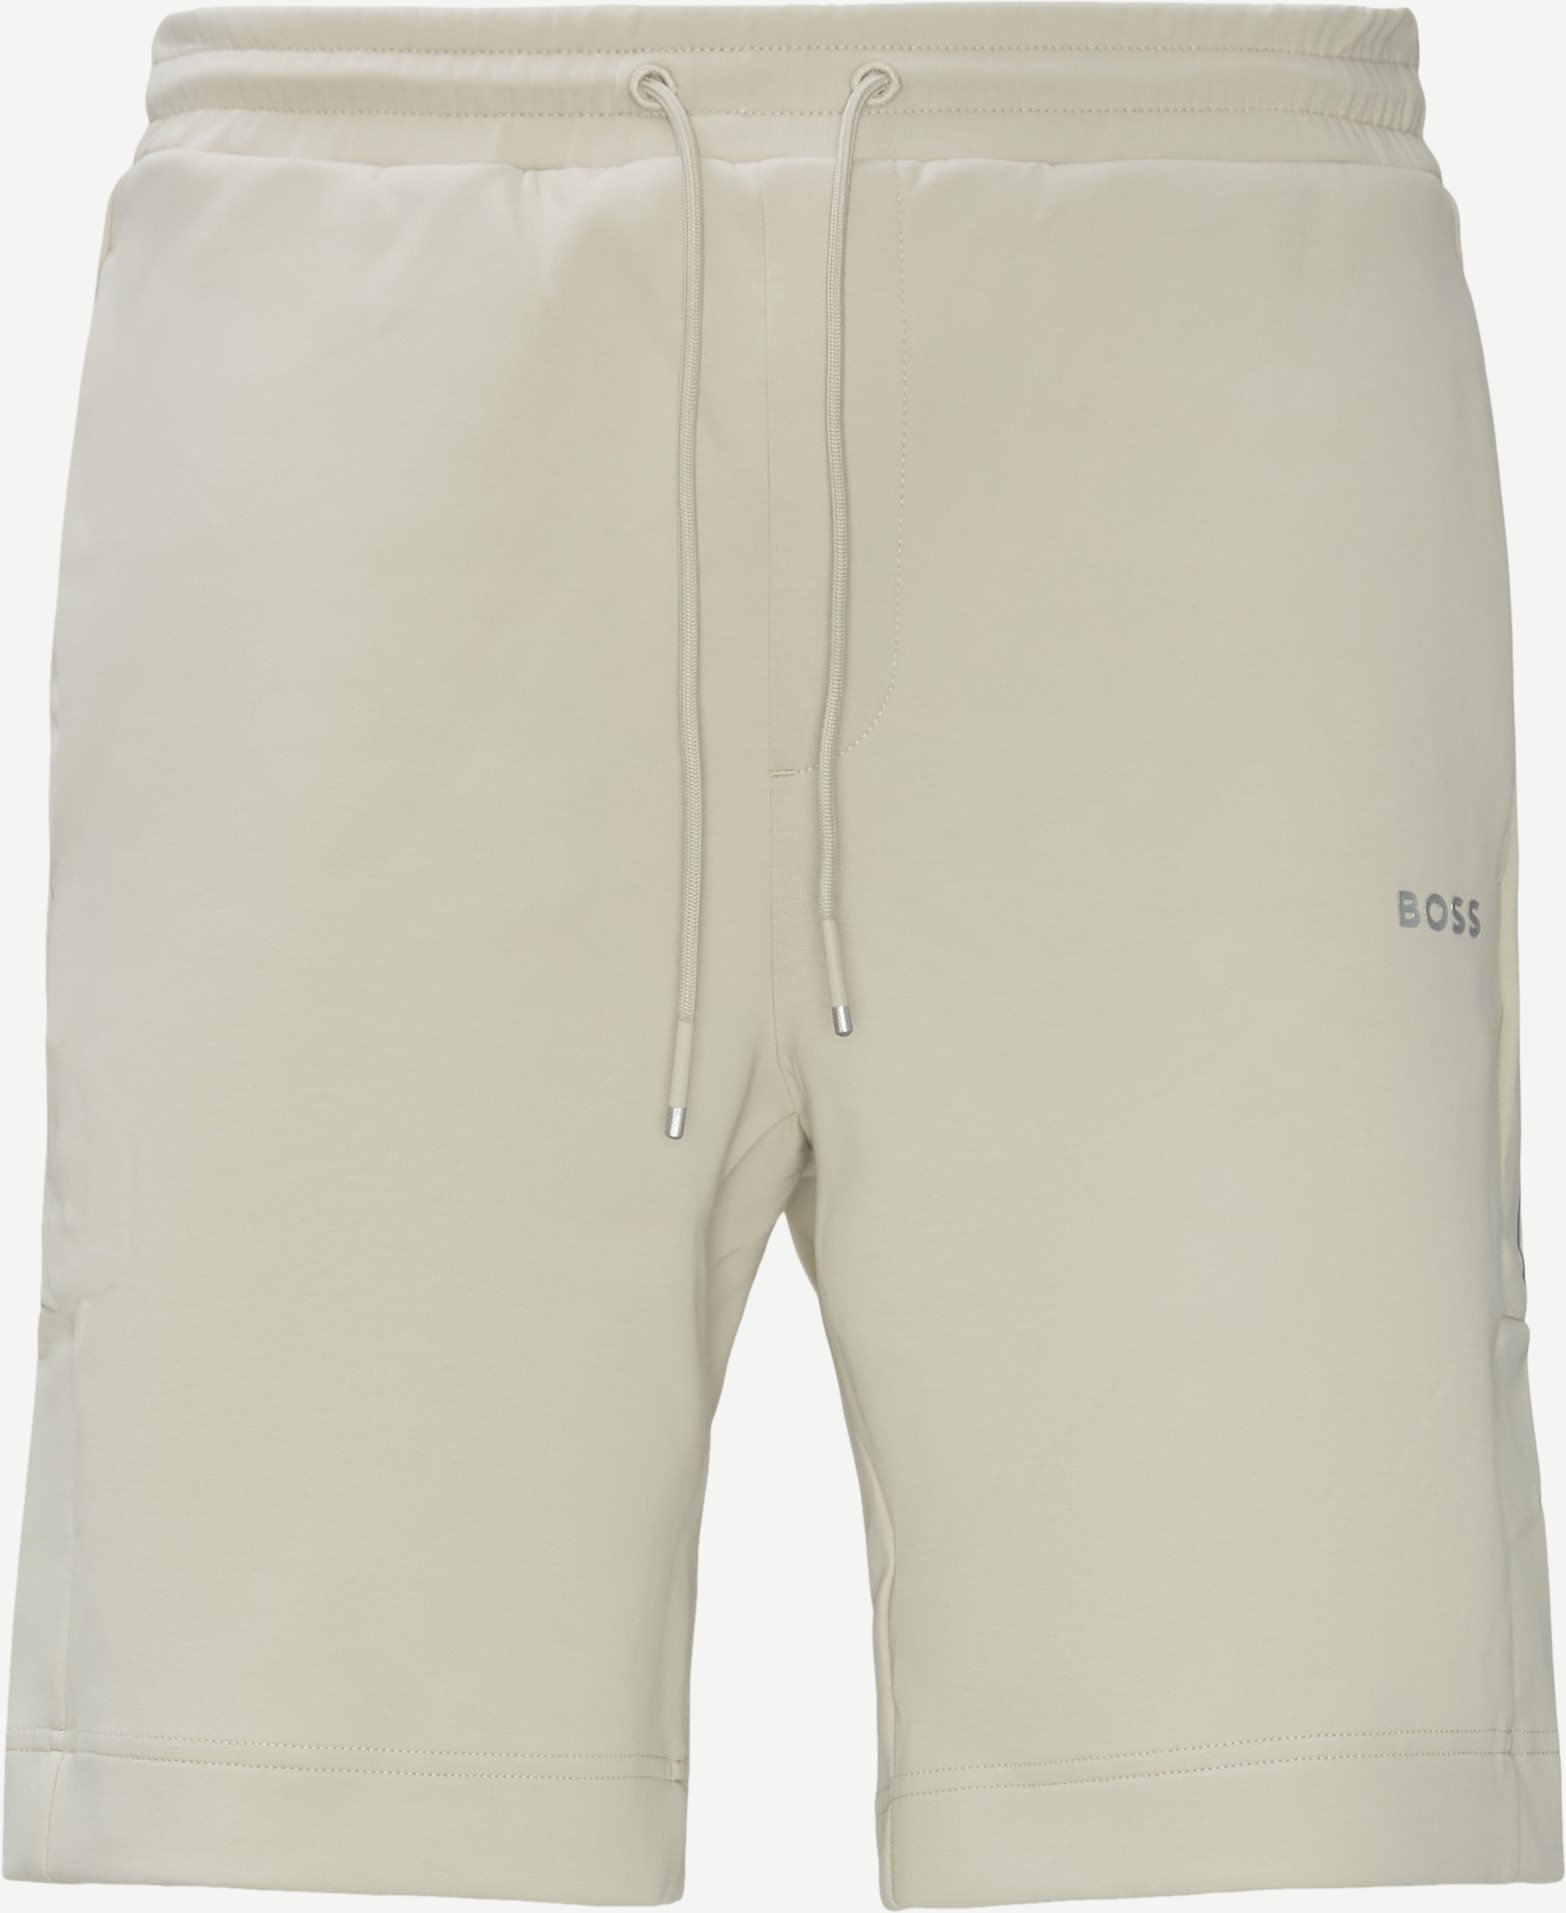 Shorts - Regular fit - Sand